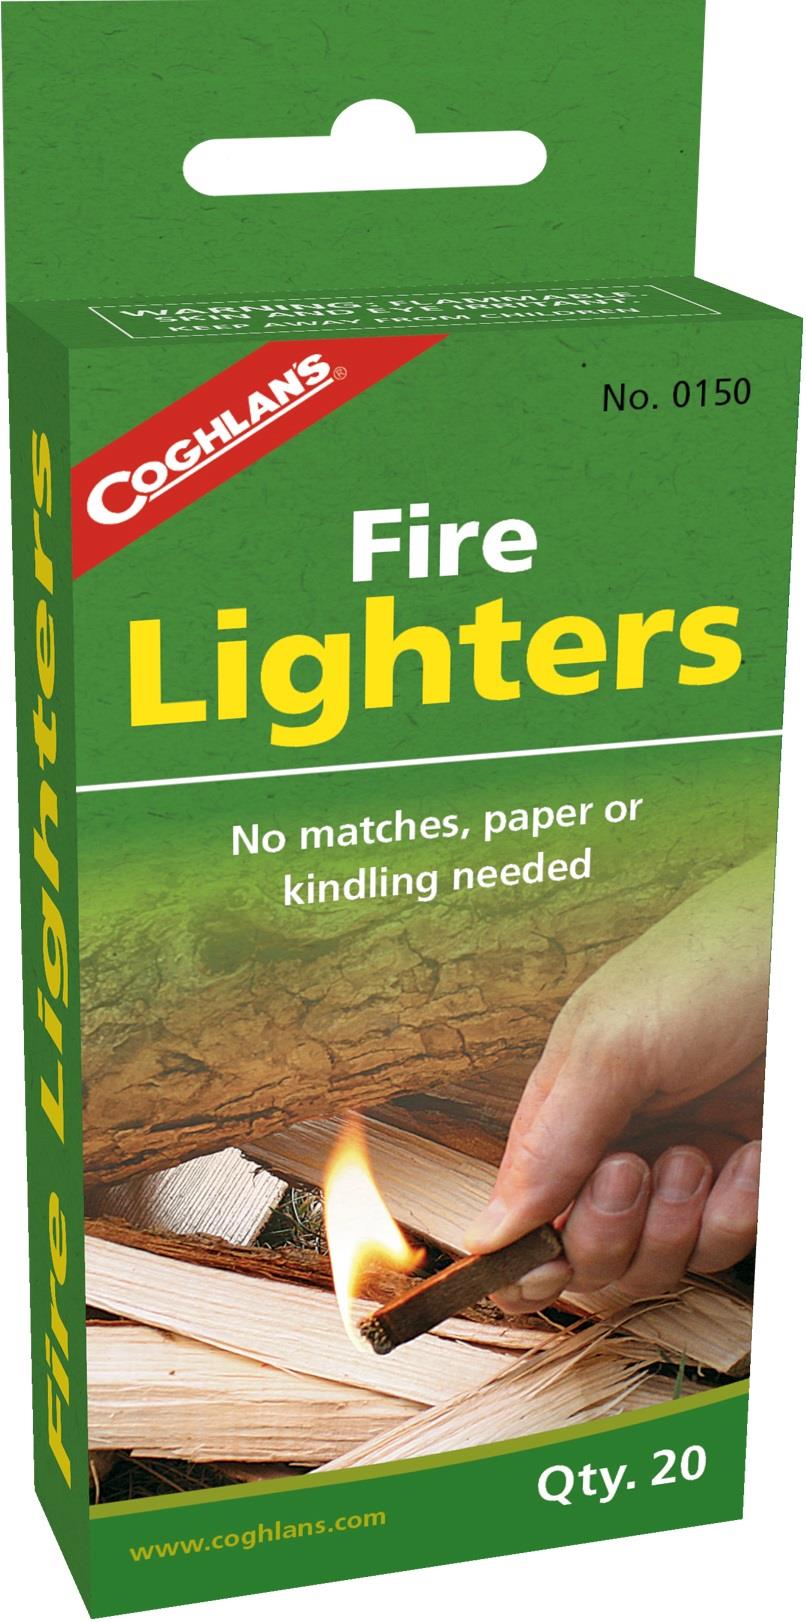 Coghlan's Fire Lighters 20 QTY